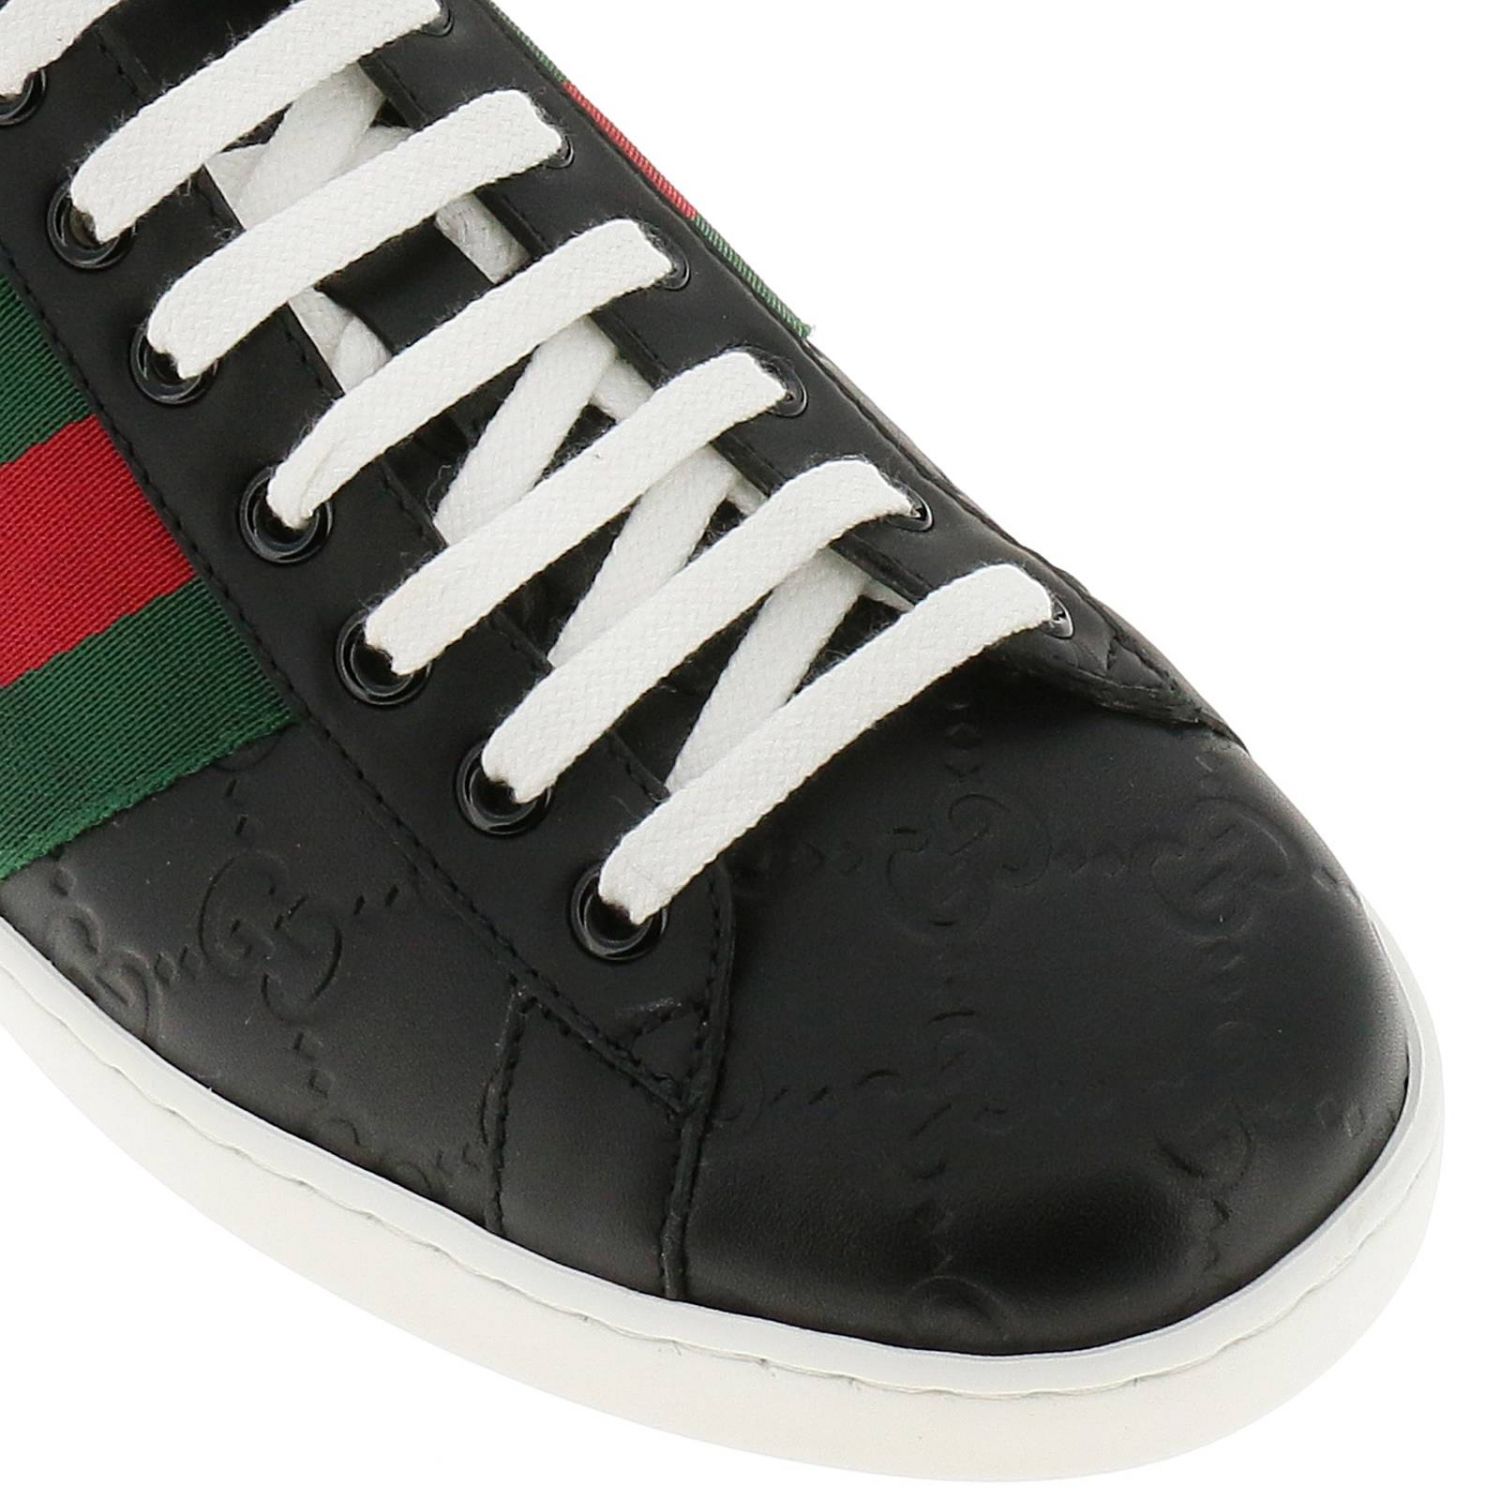 GUCCI: Shoes men | Sneakers Gucci Men Black | Sneakers Gucci 386750